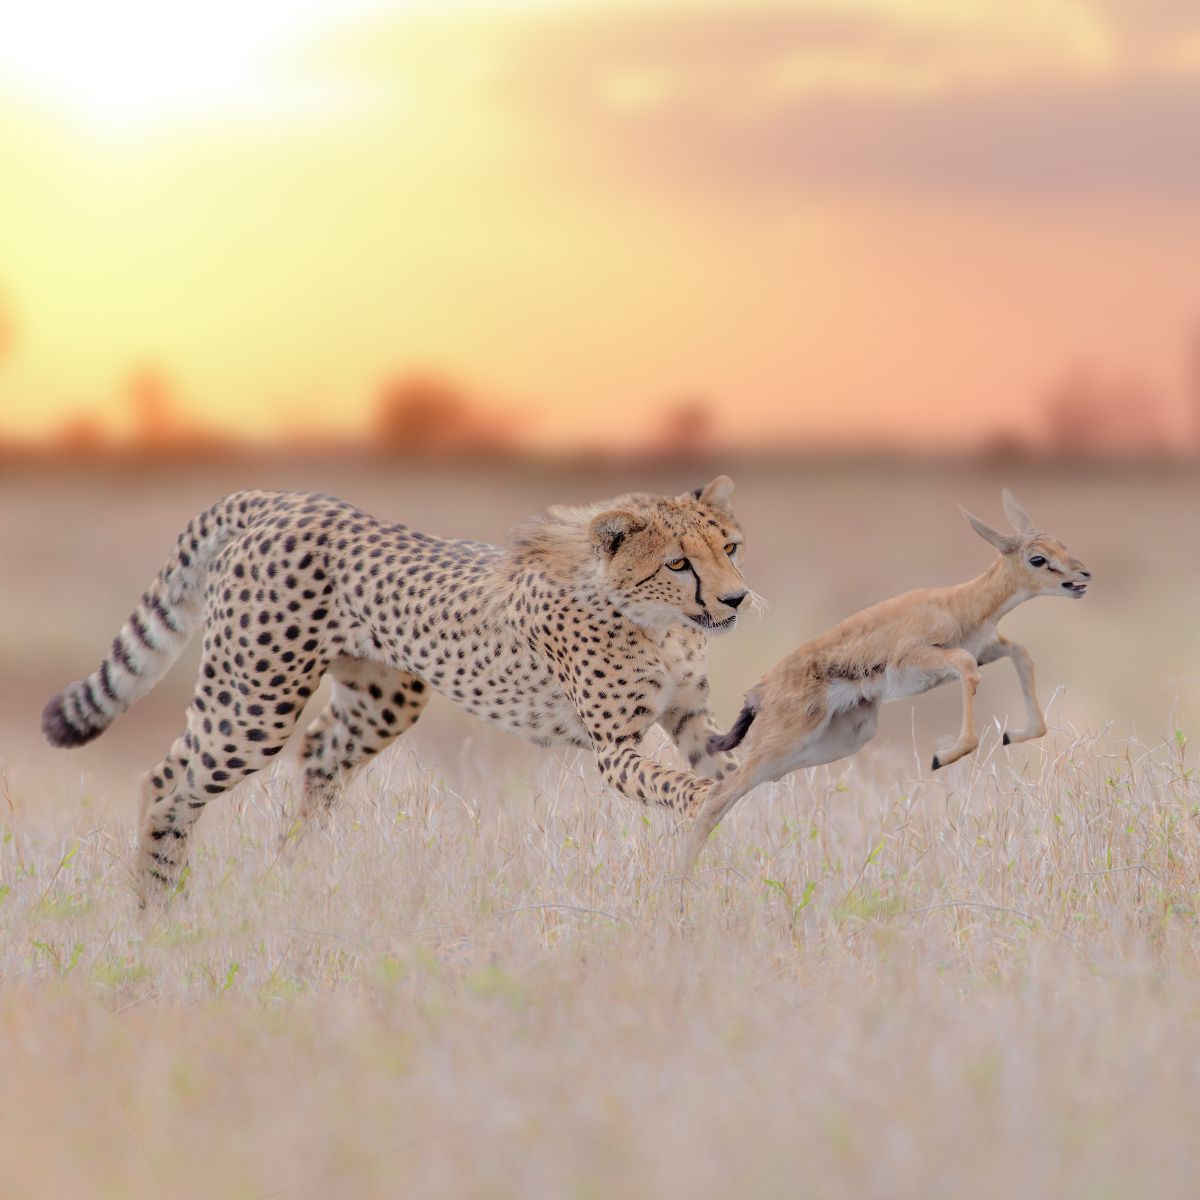 leopard running after prey